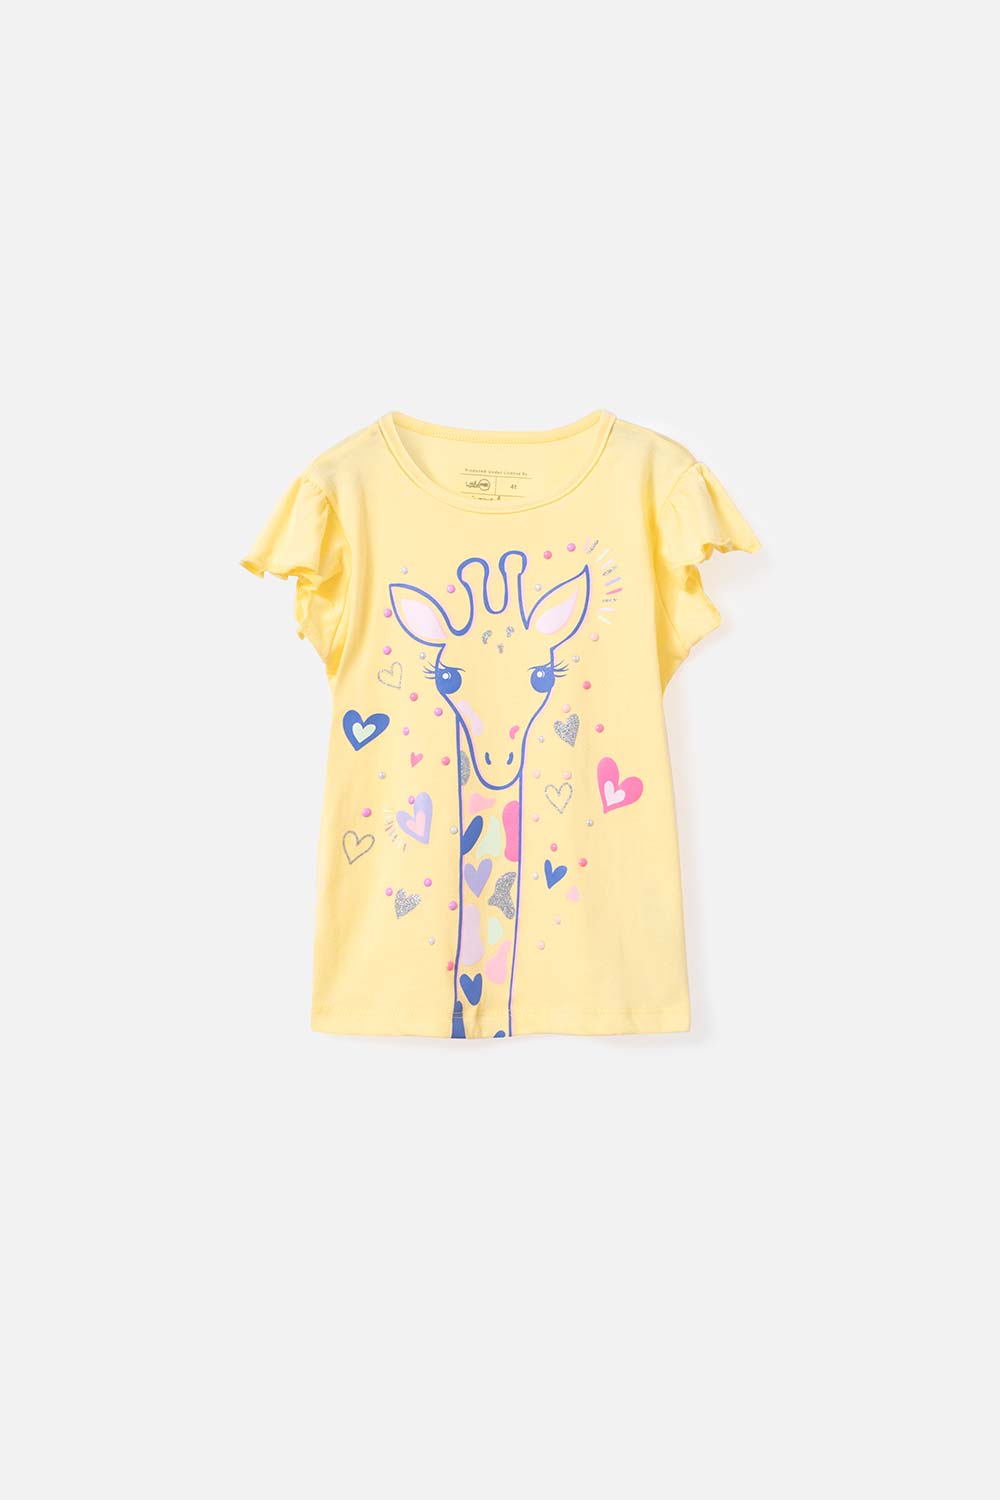 Camiseta LittleMic manga corta amarilla para niña 2T a 5T - Ponemos la  Fantasía!